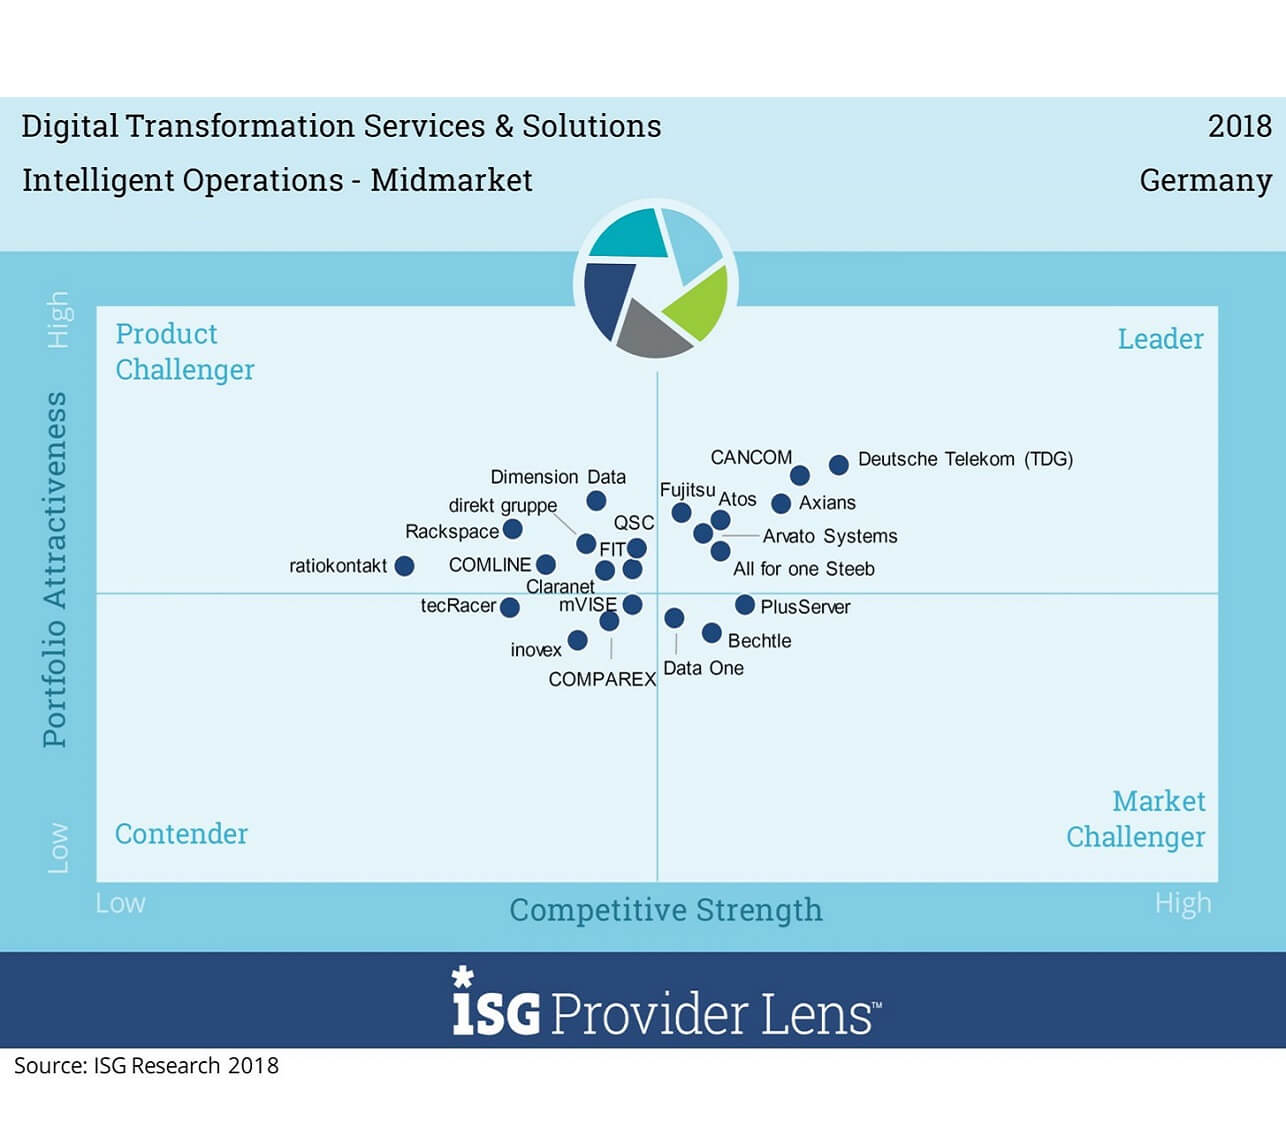 ISG Digital Transformation Services Solution Leader Germany